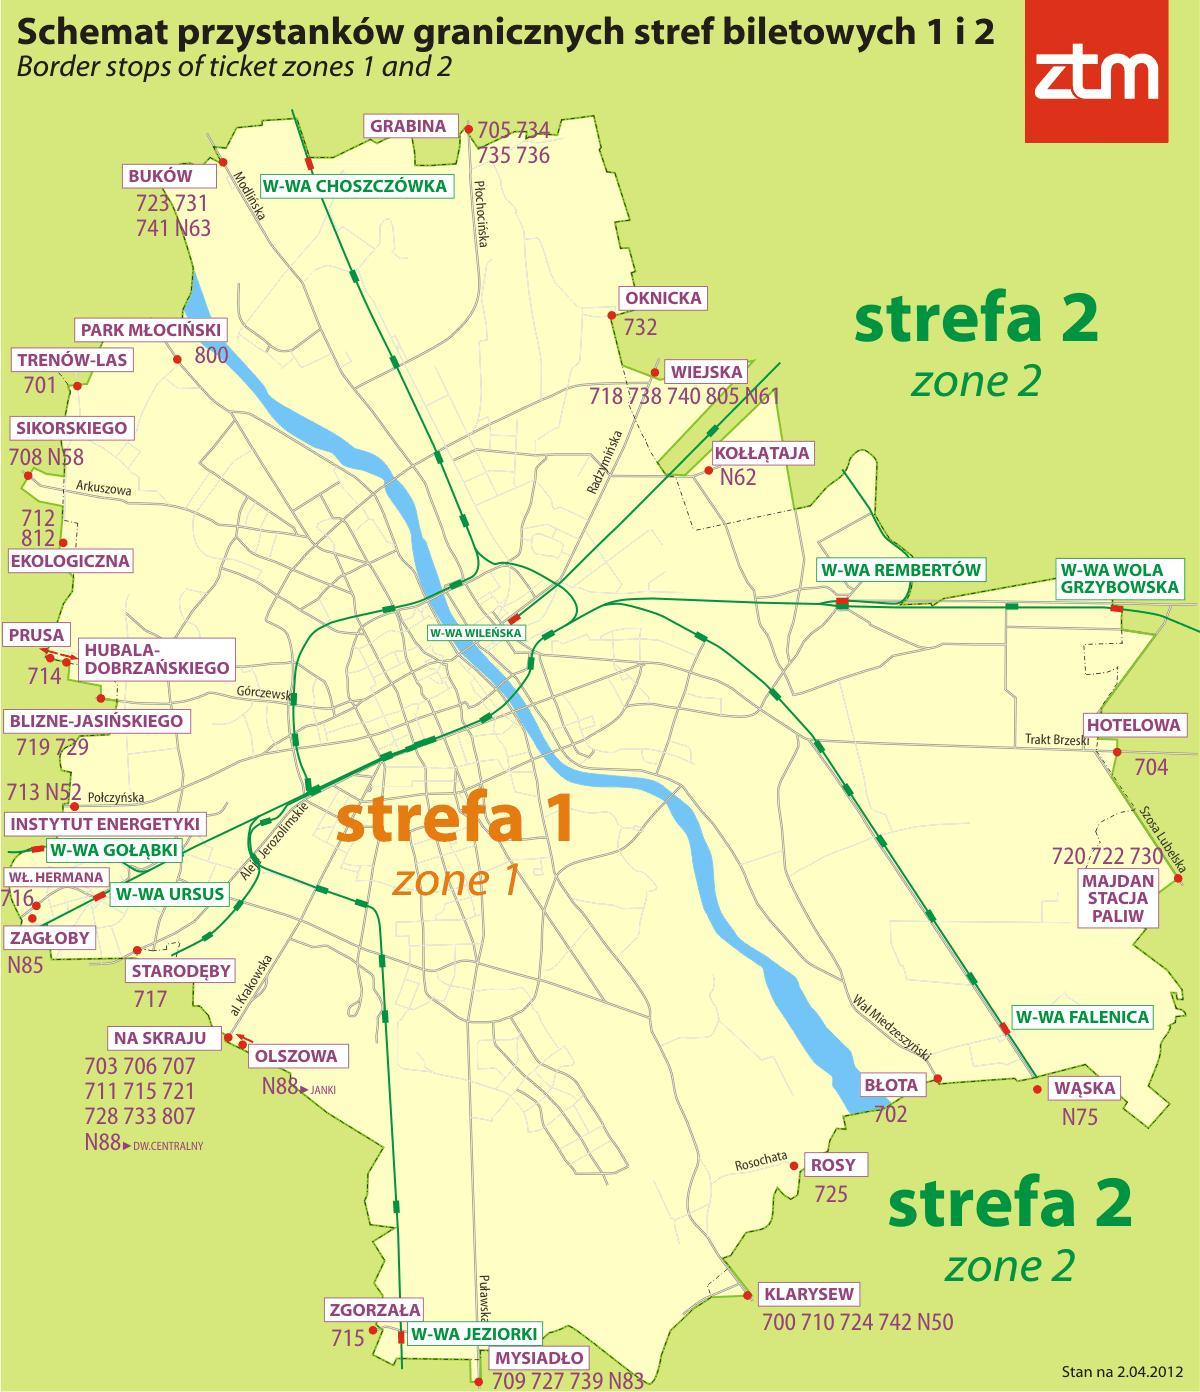 Mappa di Varsavia zona 1 2 